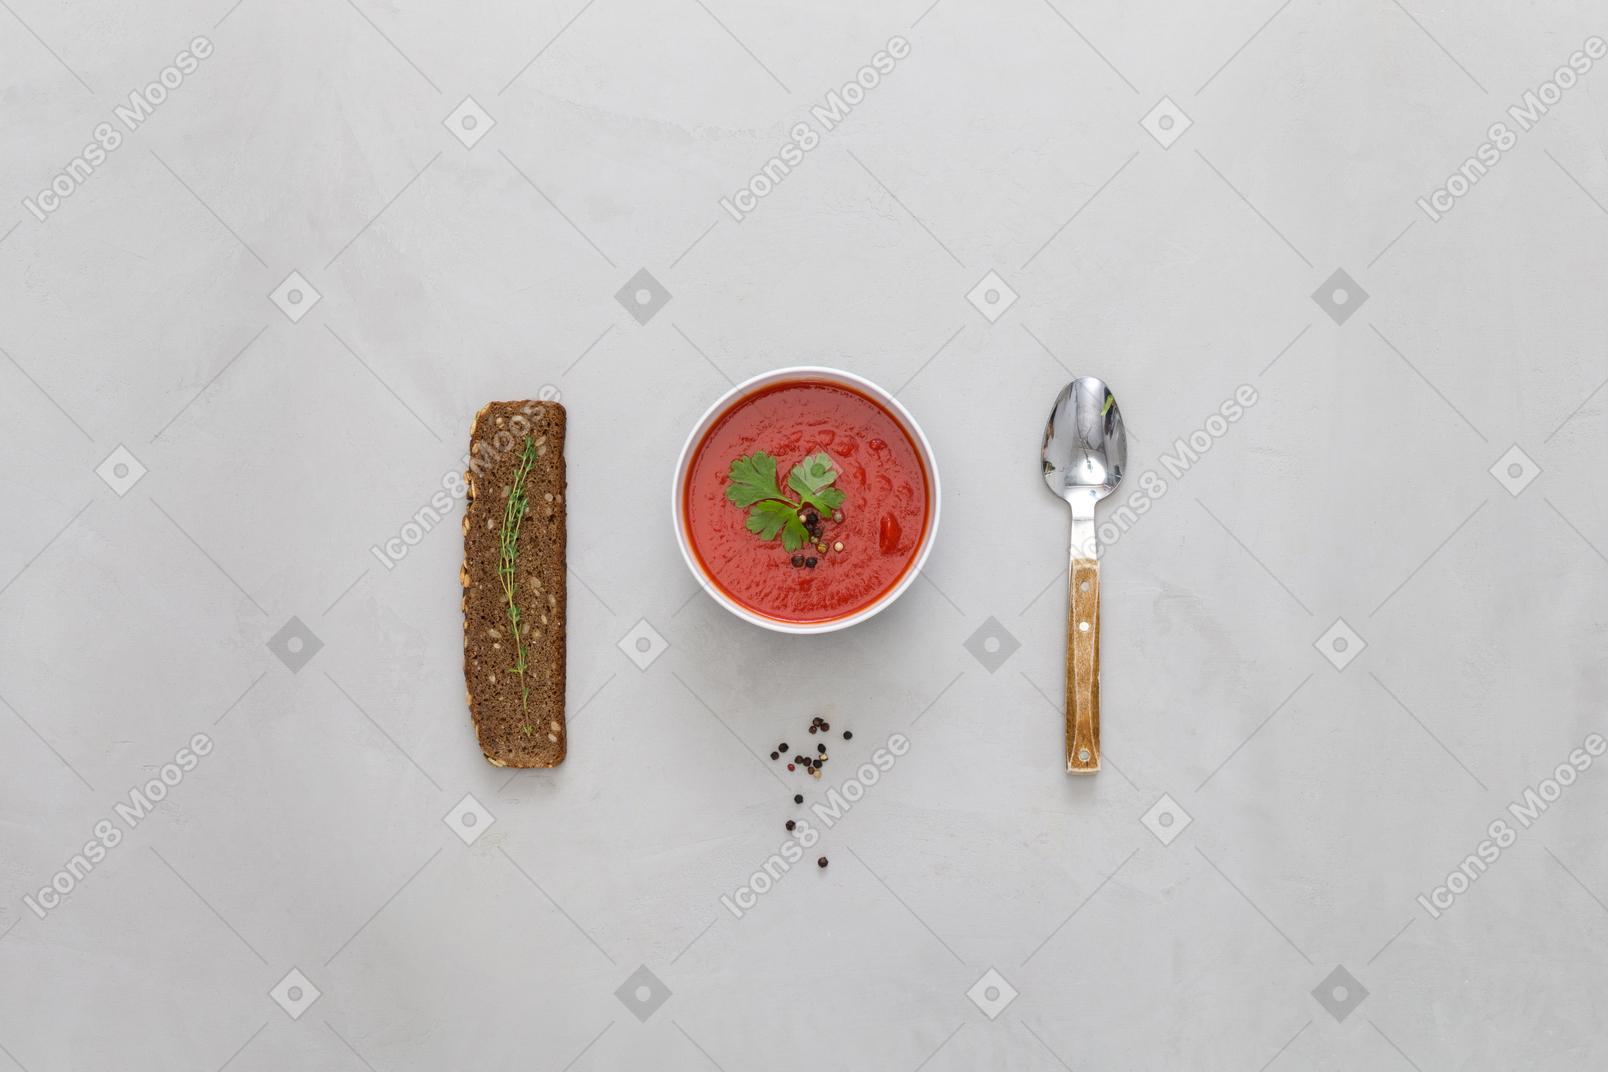 Миска томатного соуса, закуска и ложка